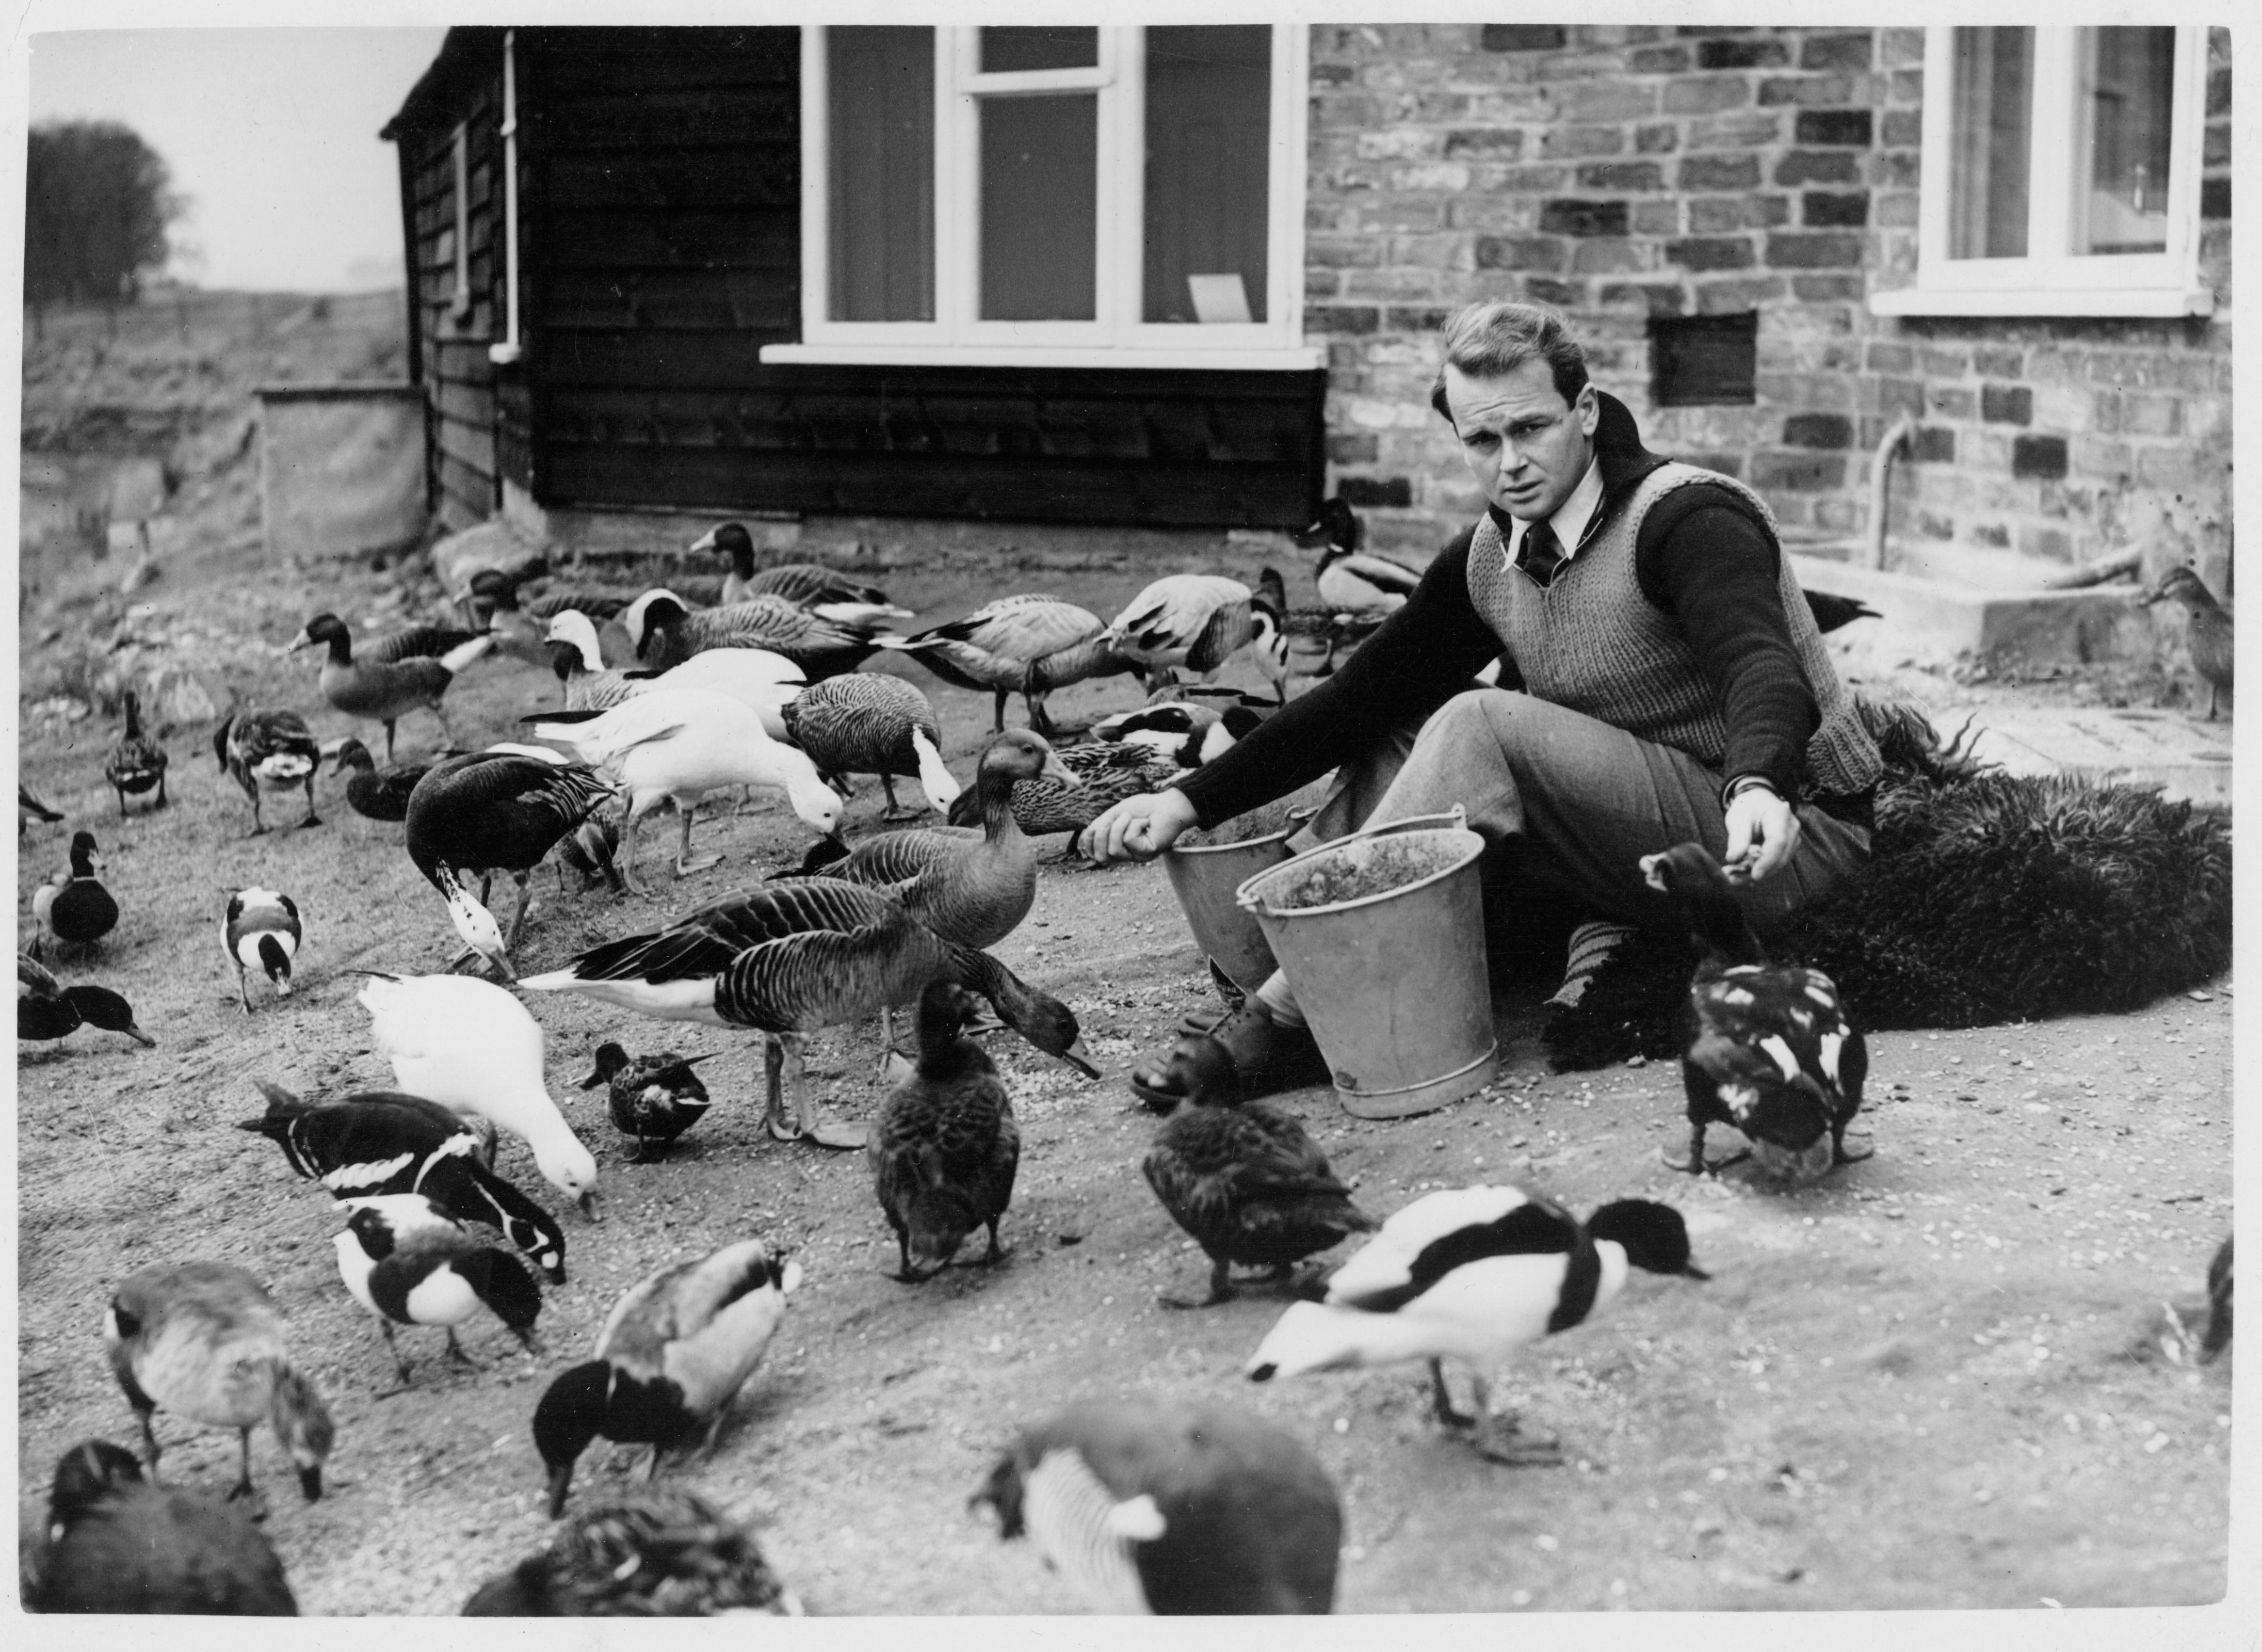 WWT founder Sir Peter Scott feeding geese at Slimbridge (WWT/PA)